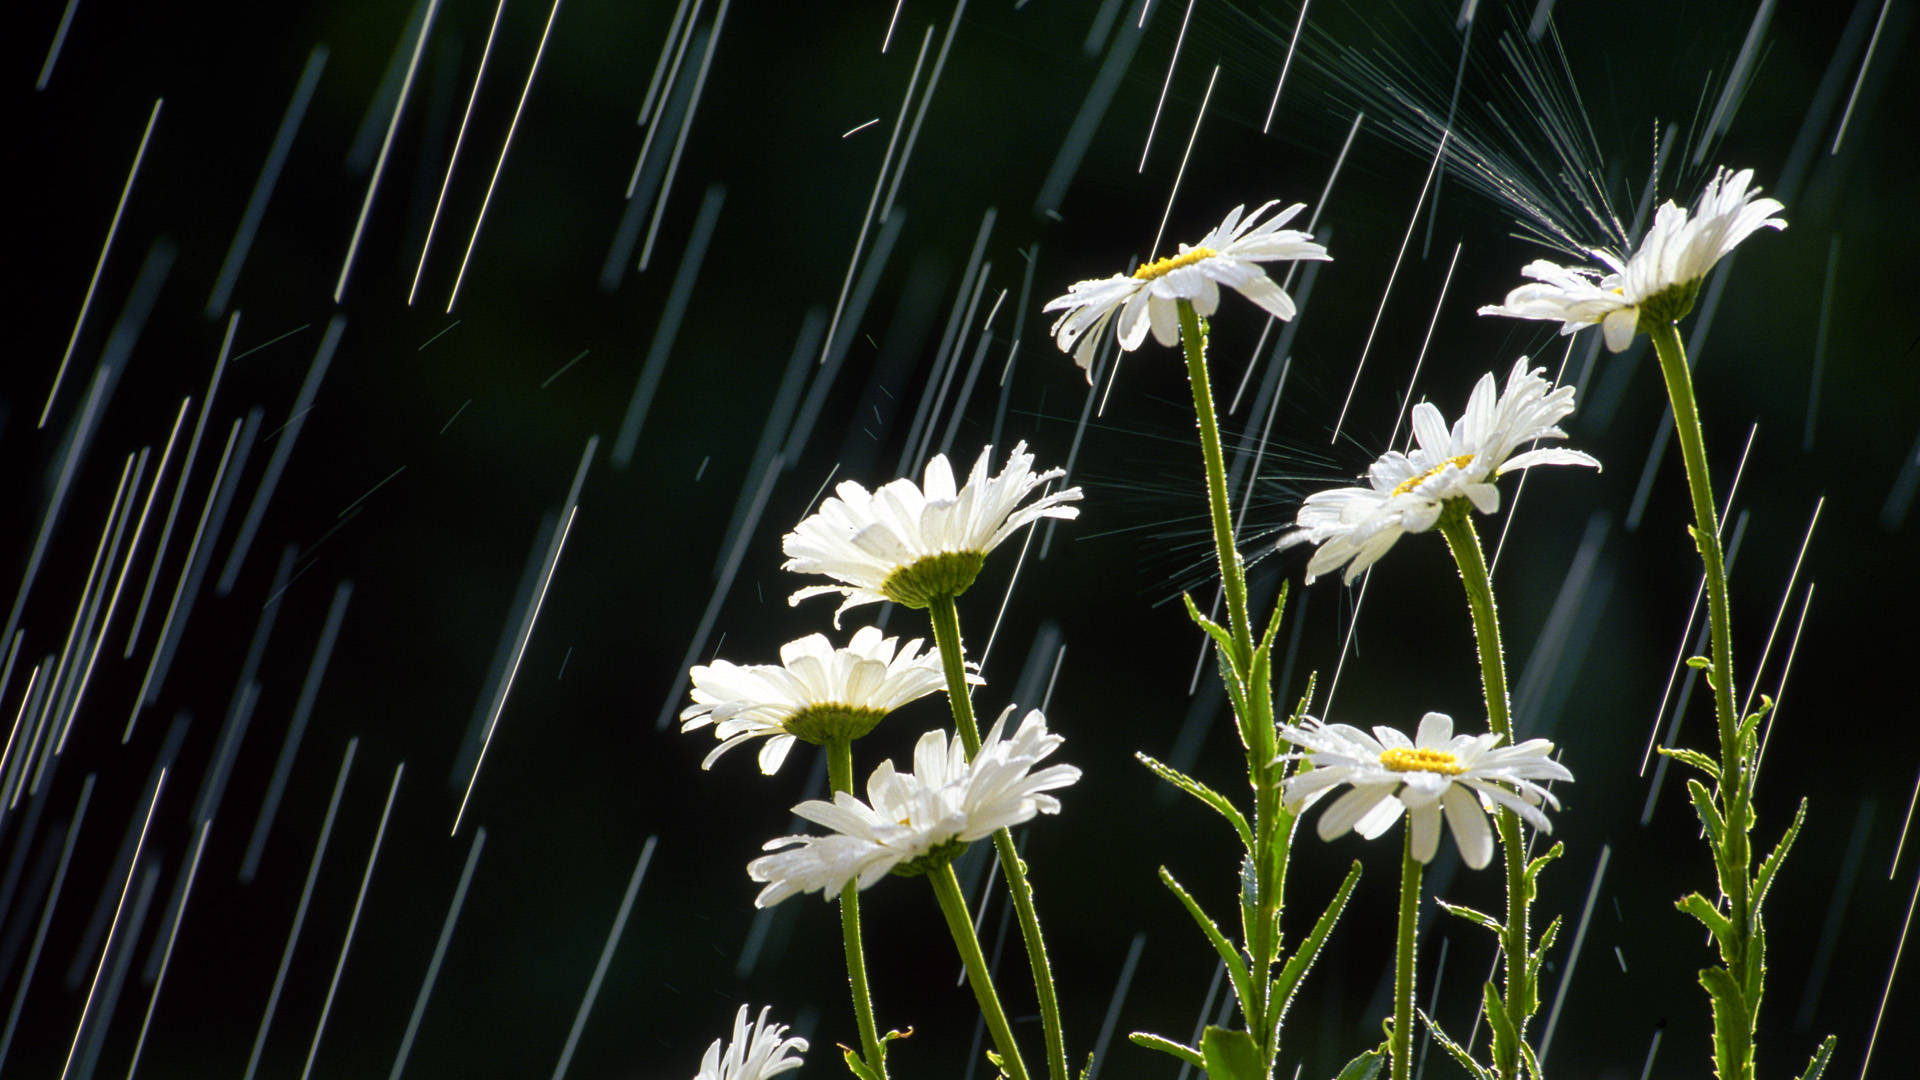 Daisy Flowers In The Rain